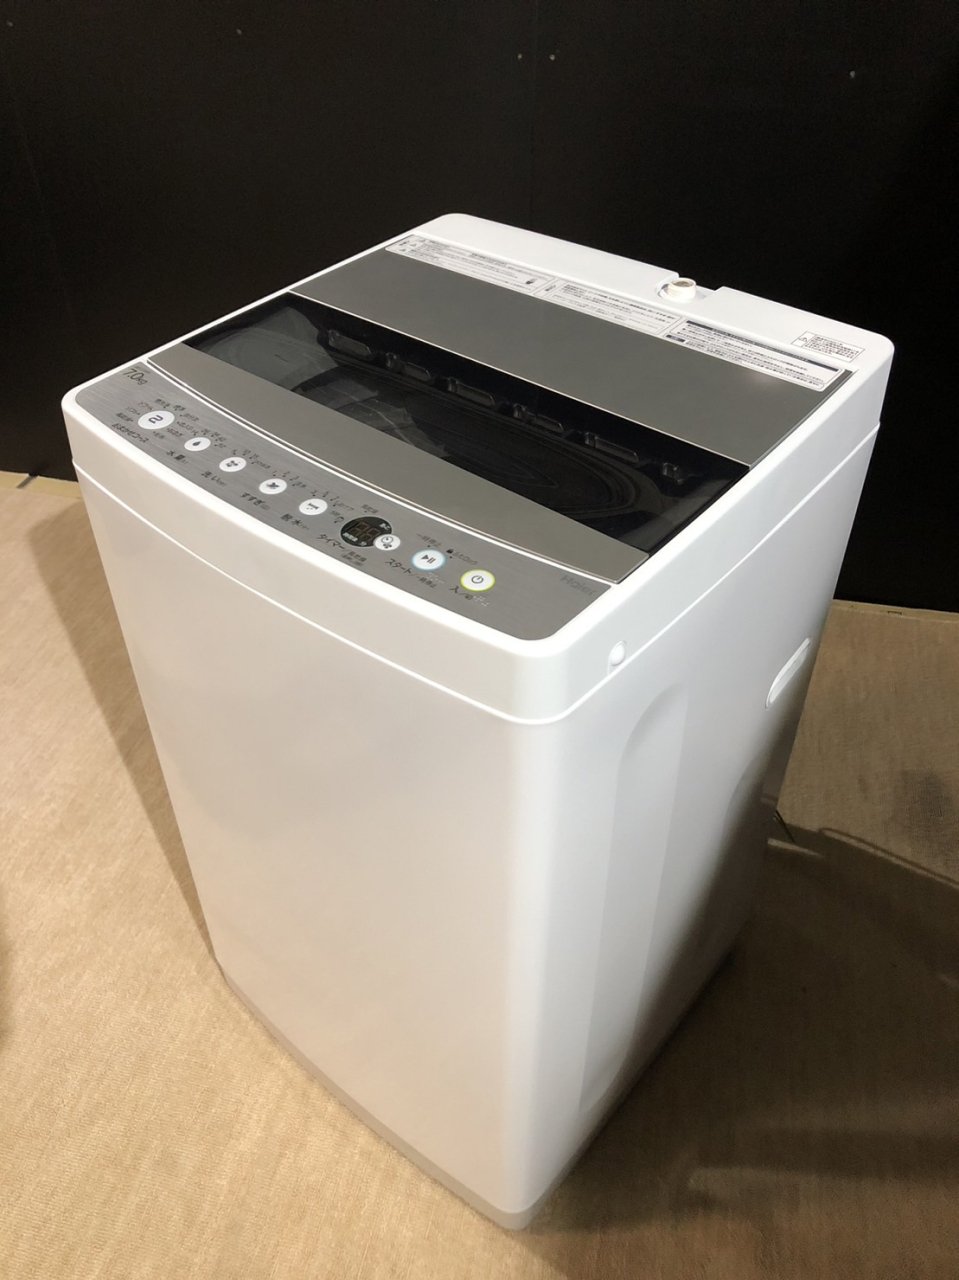 ２０２１年式ハイアール全自動洗濯機 - 生活家電